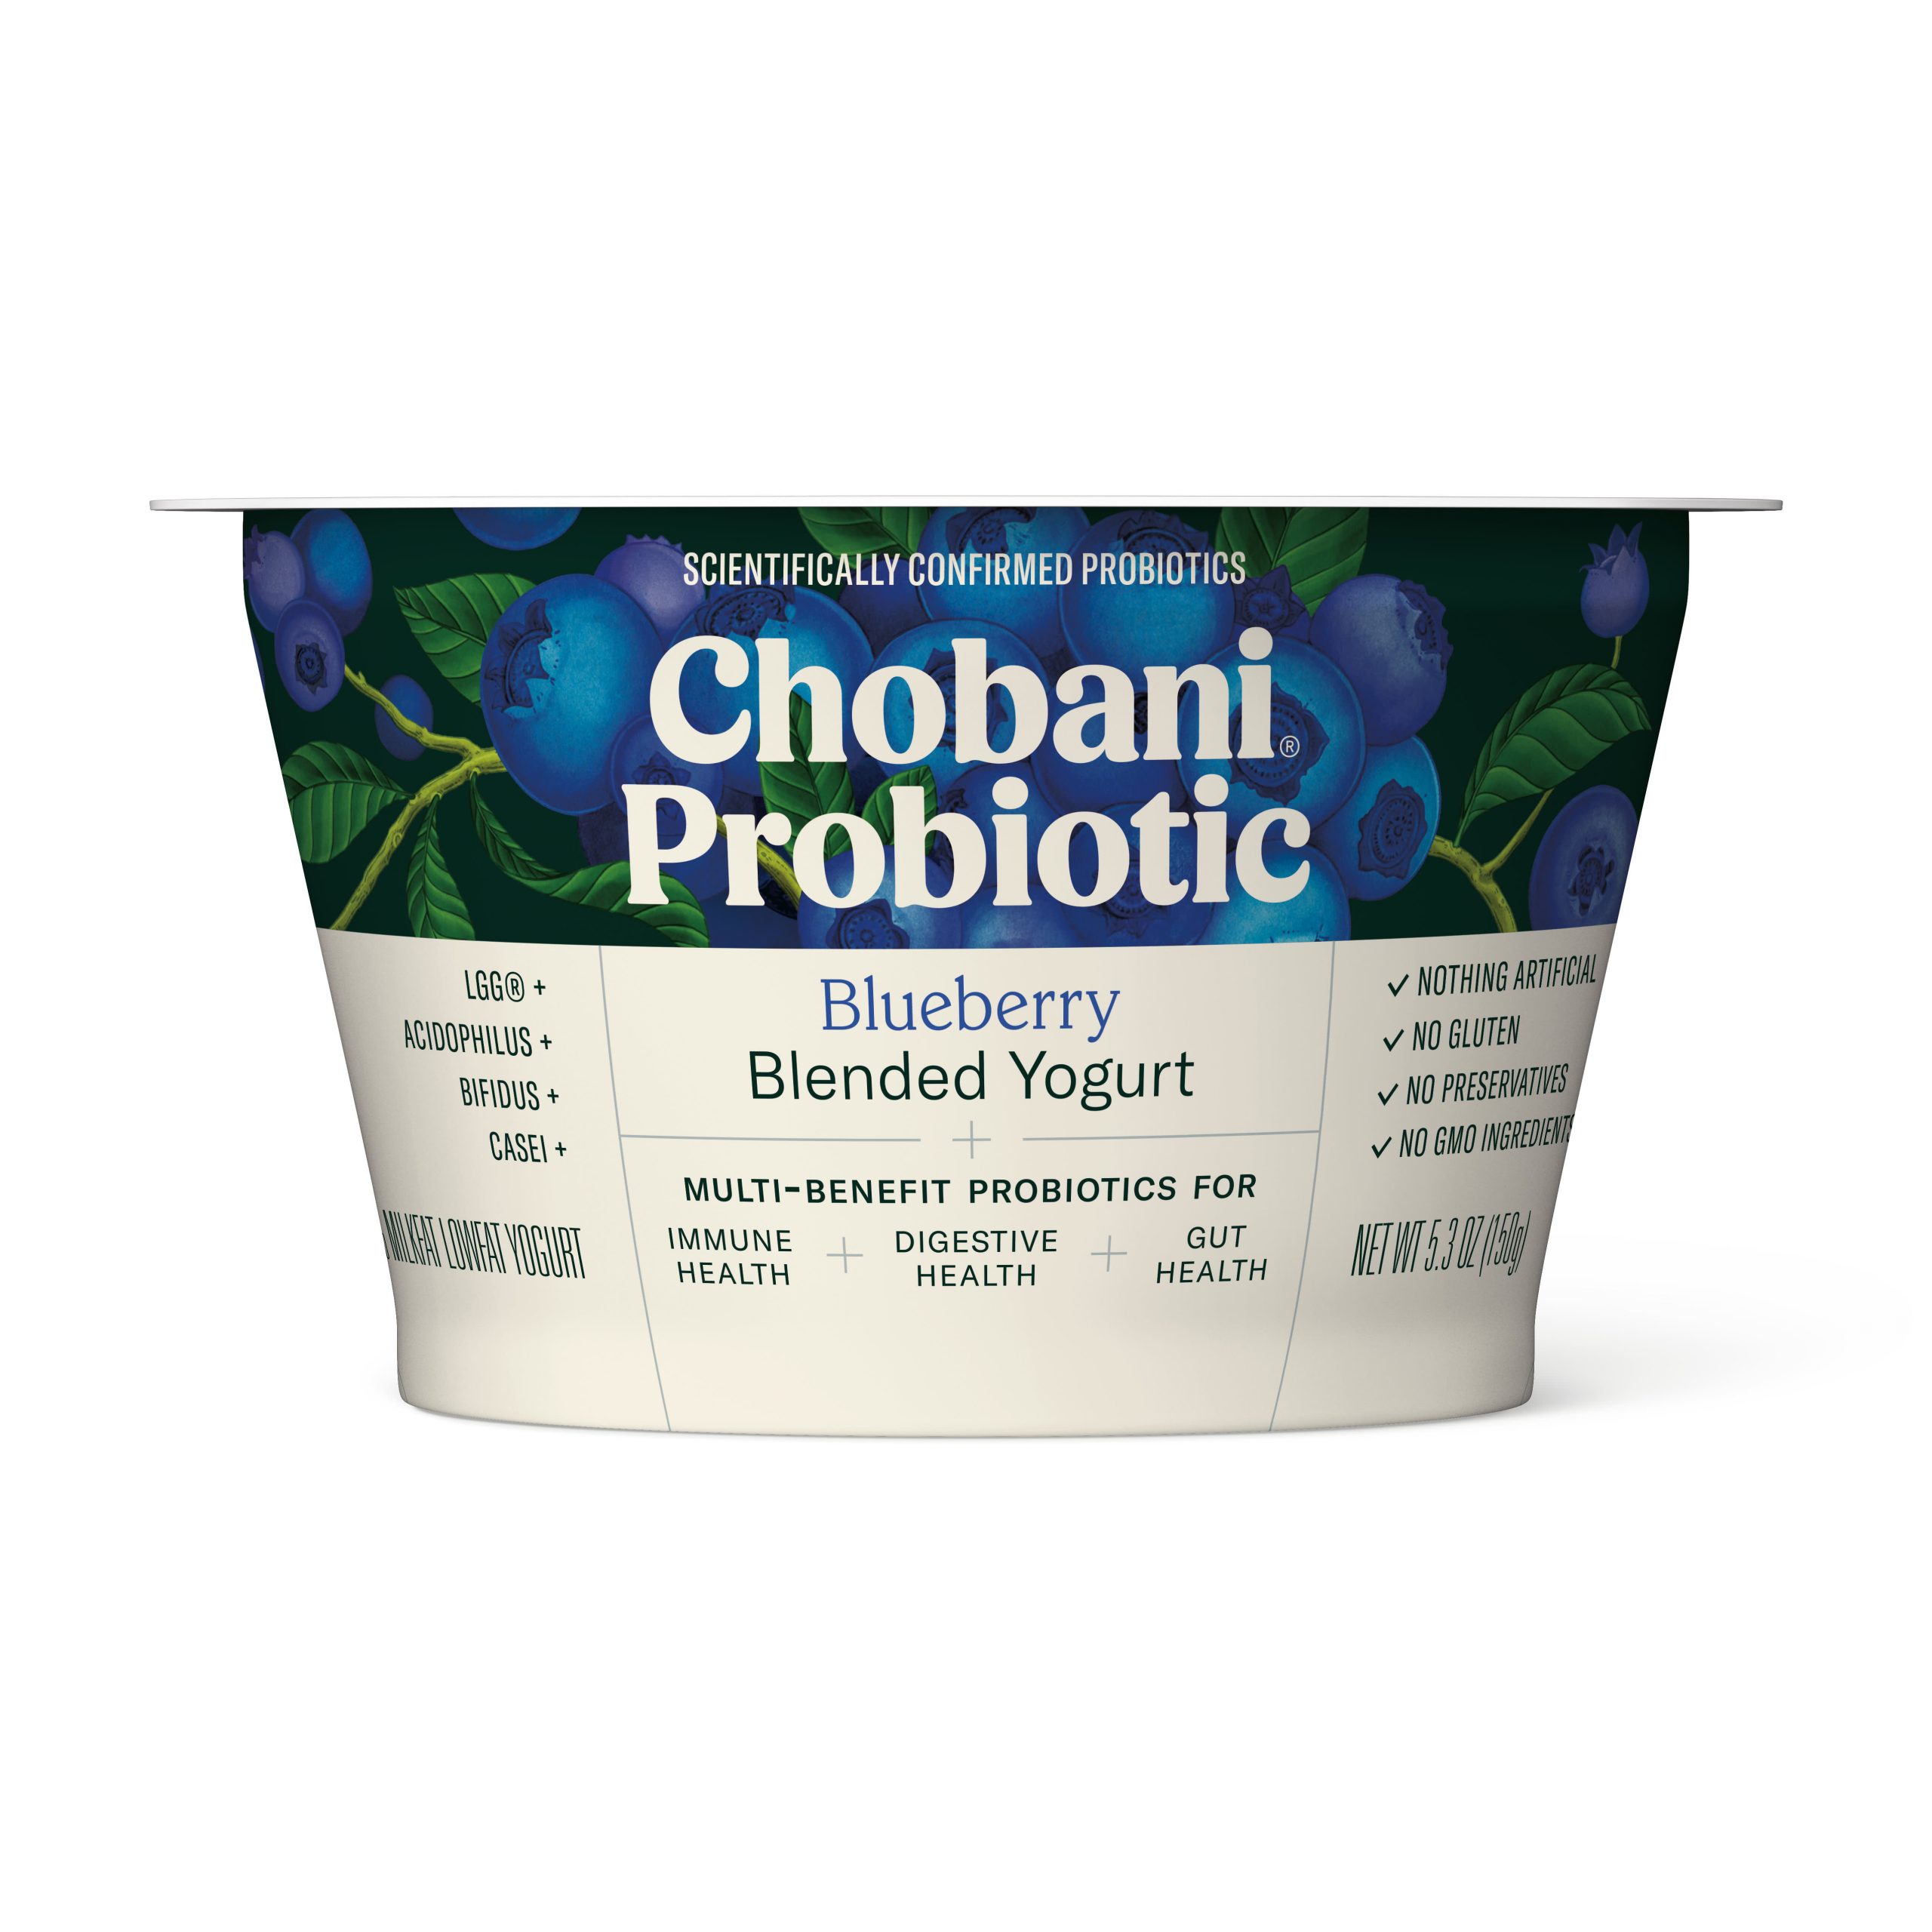 Chobani bets on probiotics development to revive U.S. yogurt gross sales